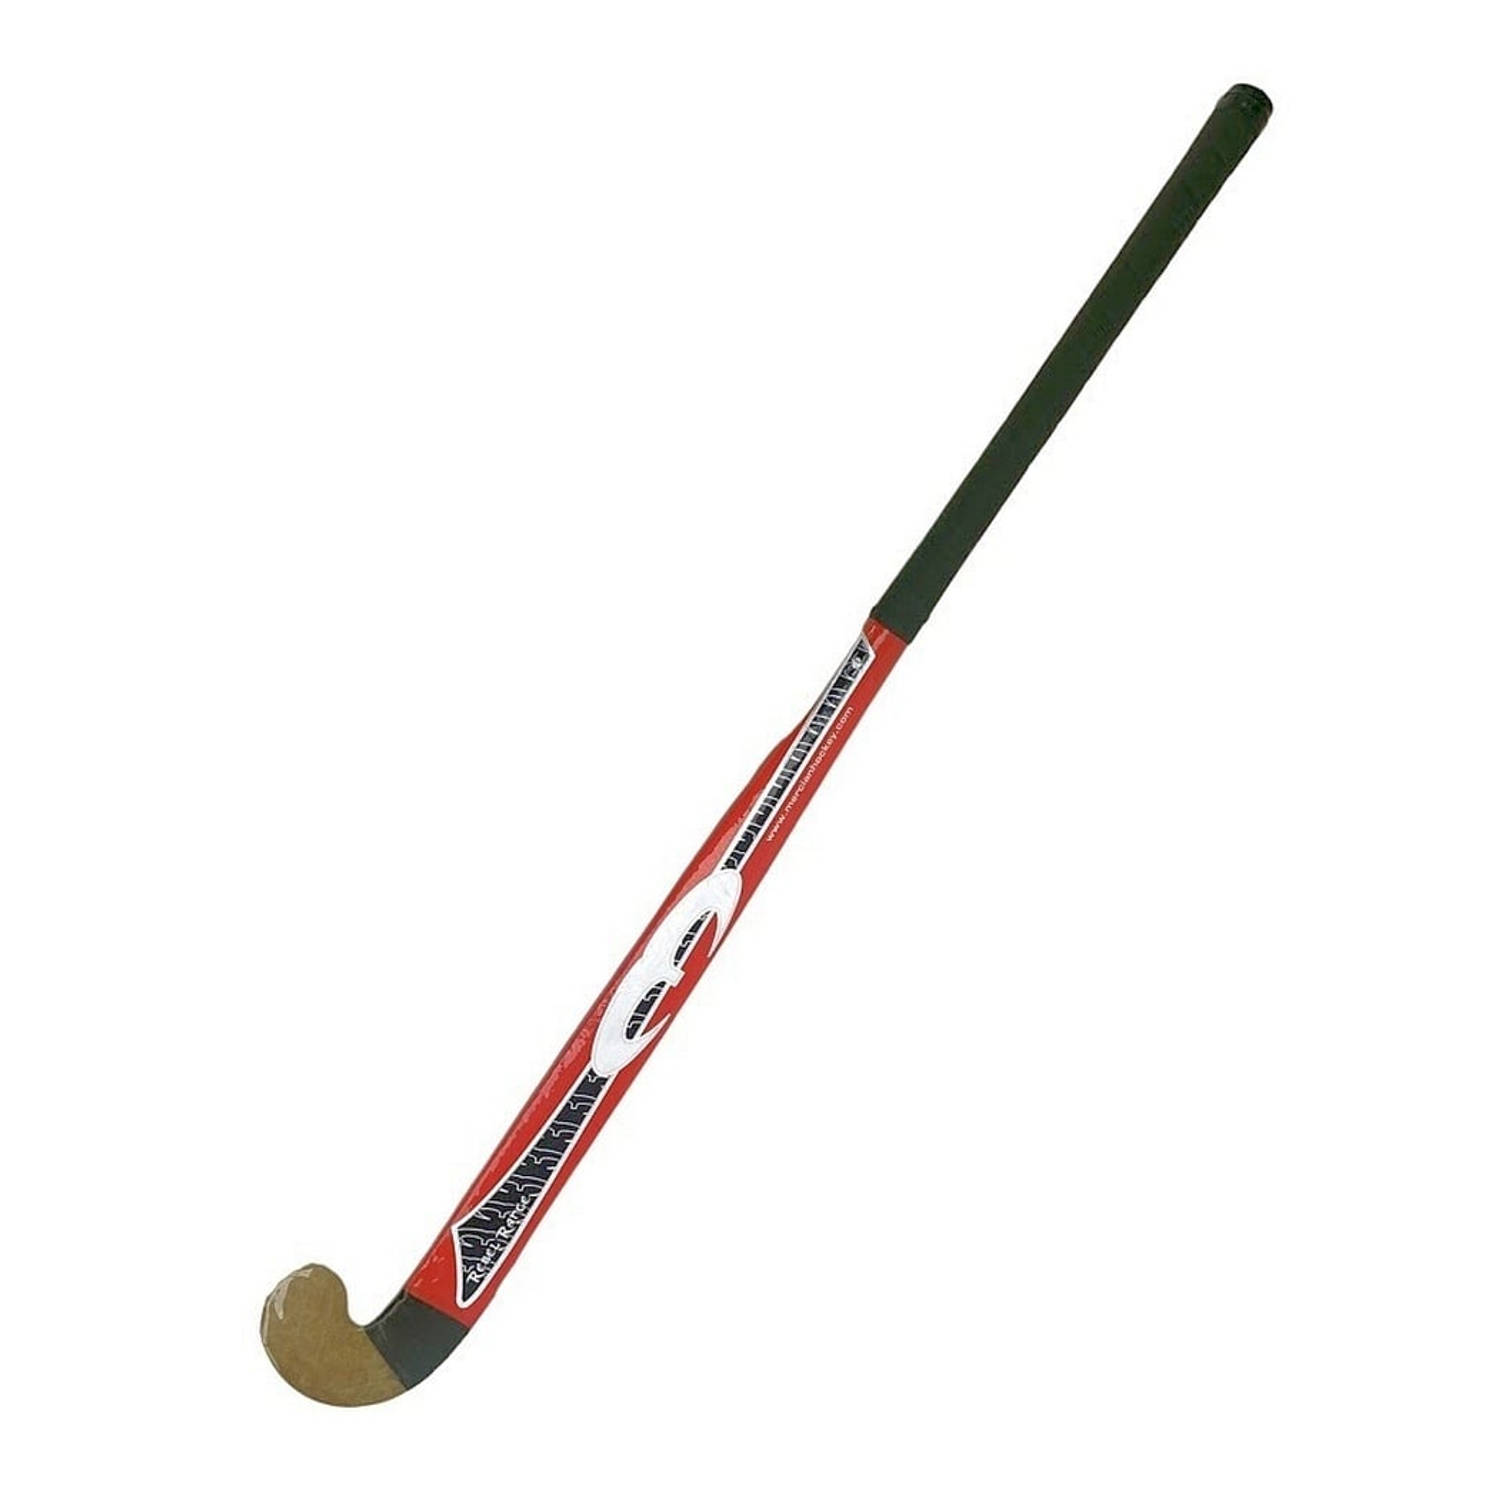 Hockeystick Mercian Piranha Rood 36 Lengte 90 cm